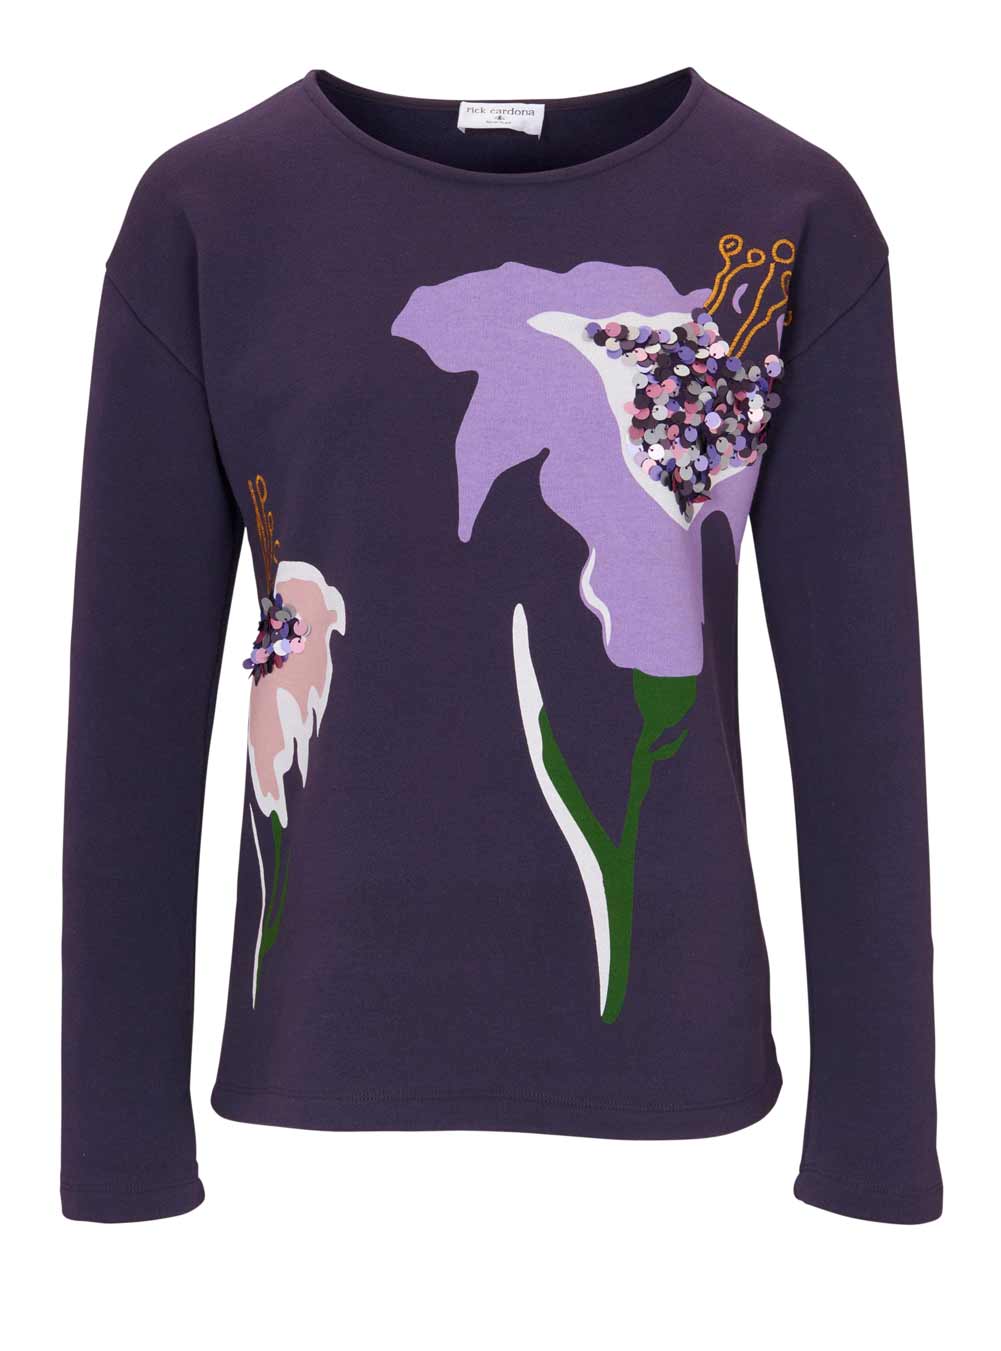 Rick Cardona Damen Designer-Sweatshirt mit Pailletten, lila